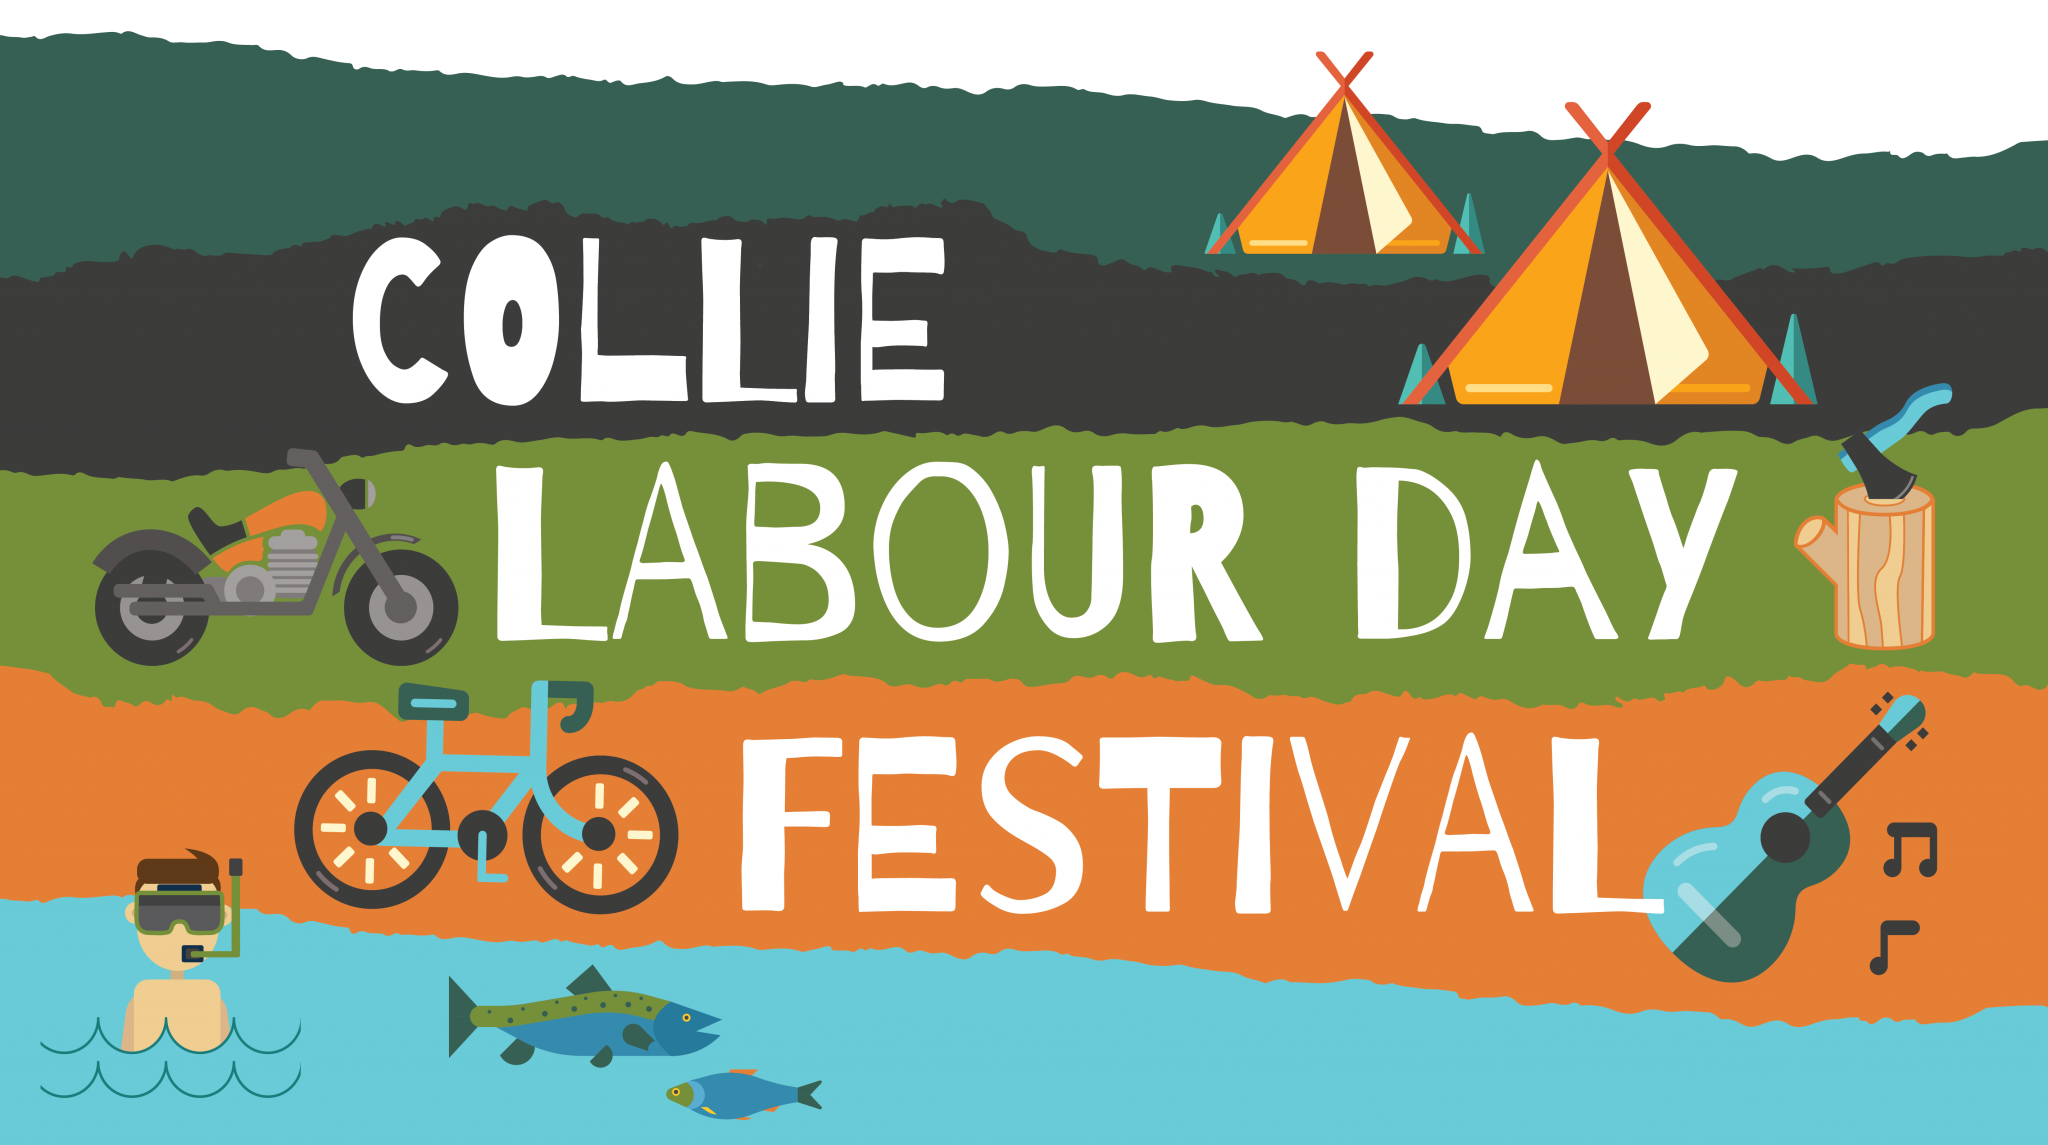 Register now for market stalls Collie Labour Day Festival